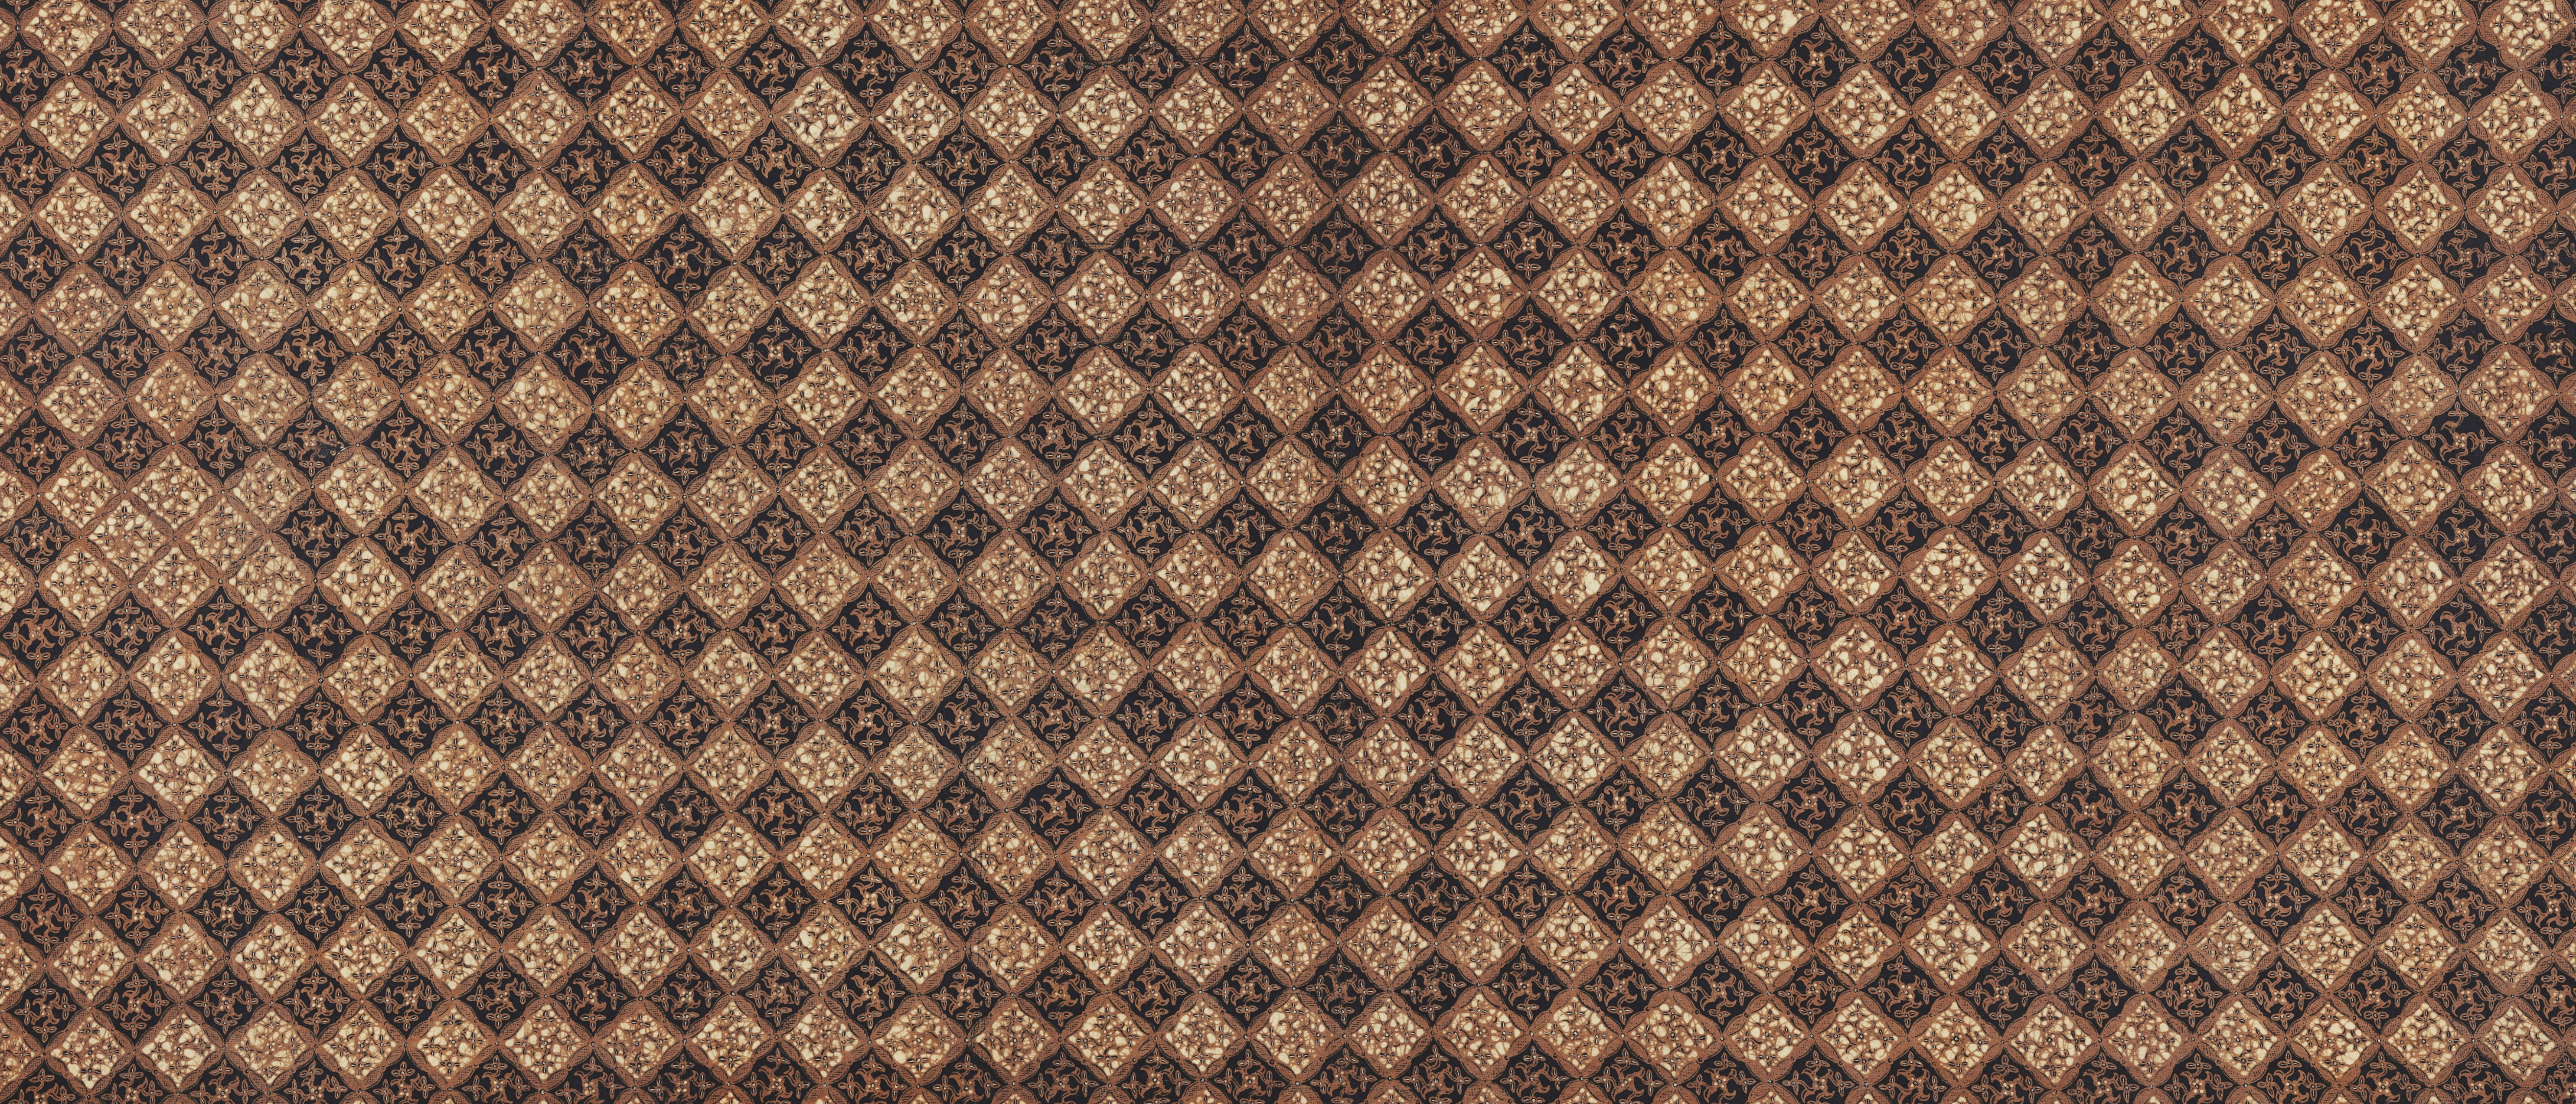 General 5941x2546 texture geometric figures ultrawide digital art fabric simple background minimalism pattern